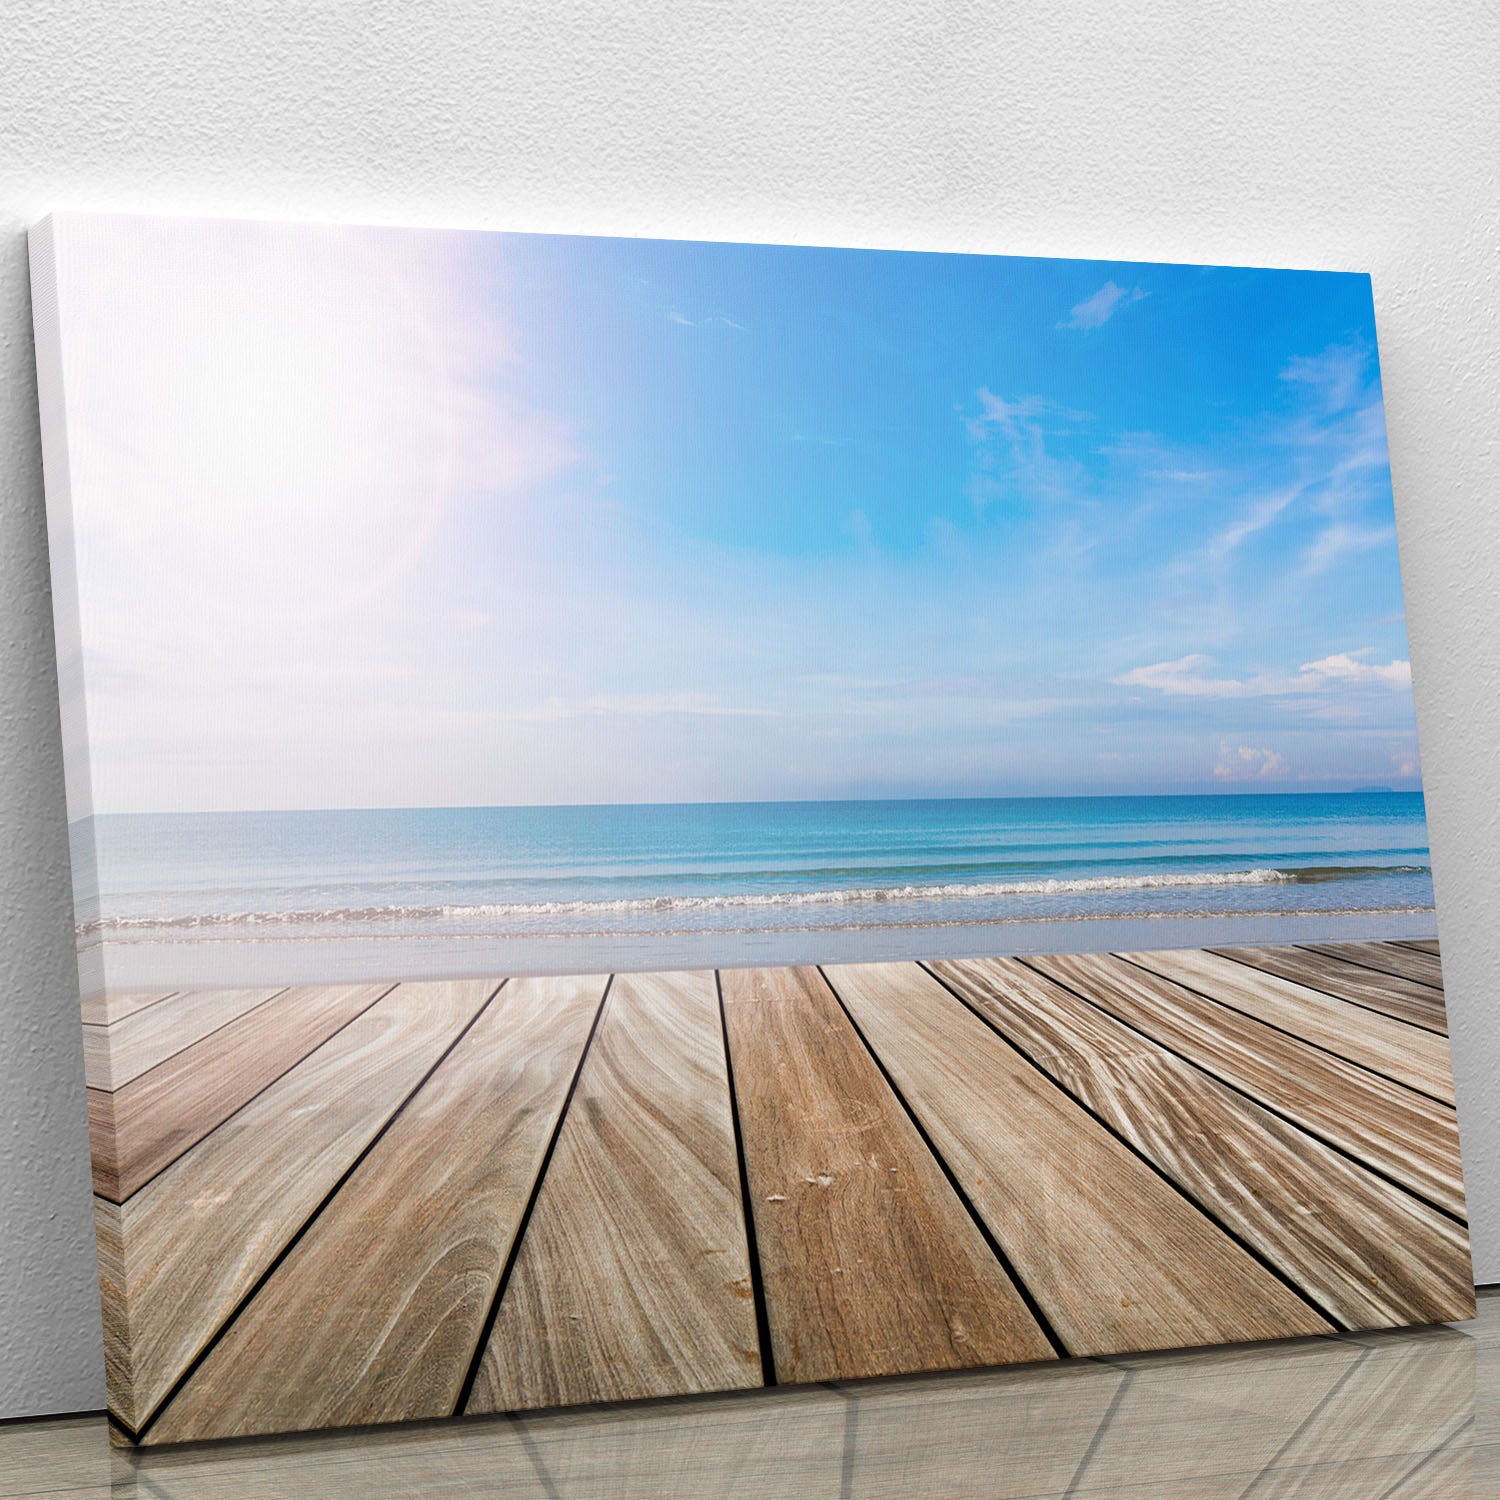 wood terrace on the beach and sun Canvas Print or Poster - Canvas Art Rocks - 1